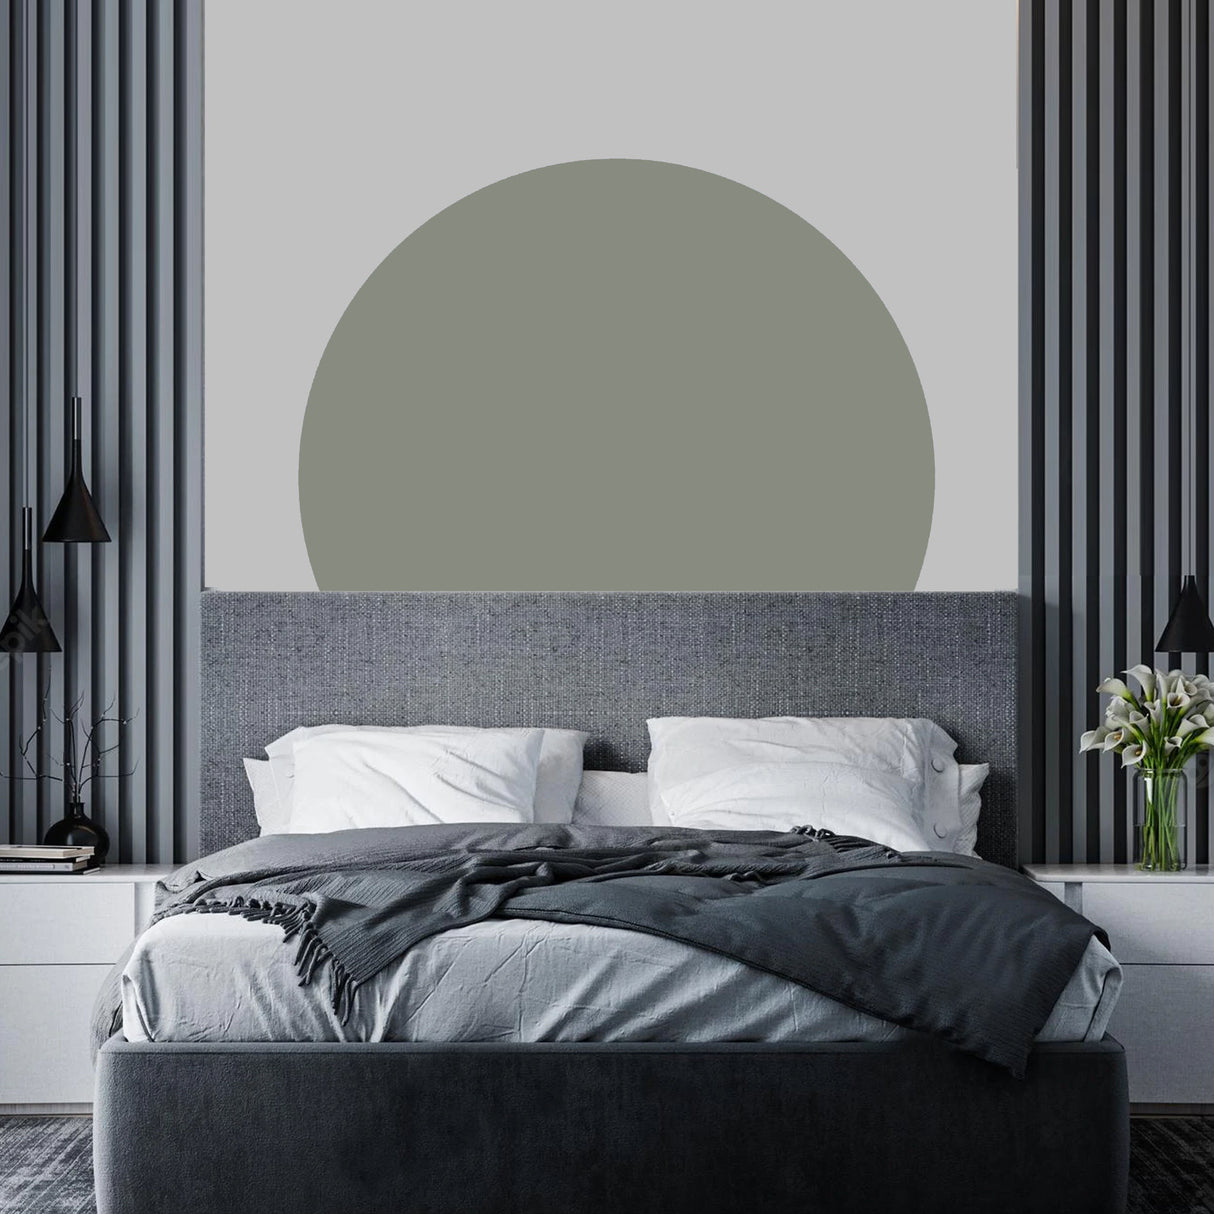 Scandinavian Style Circle Wall Sticker Decal for Interior Design